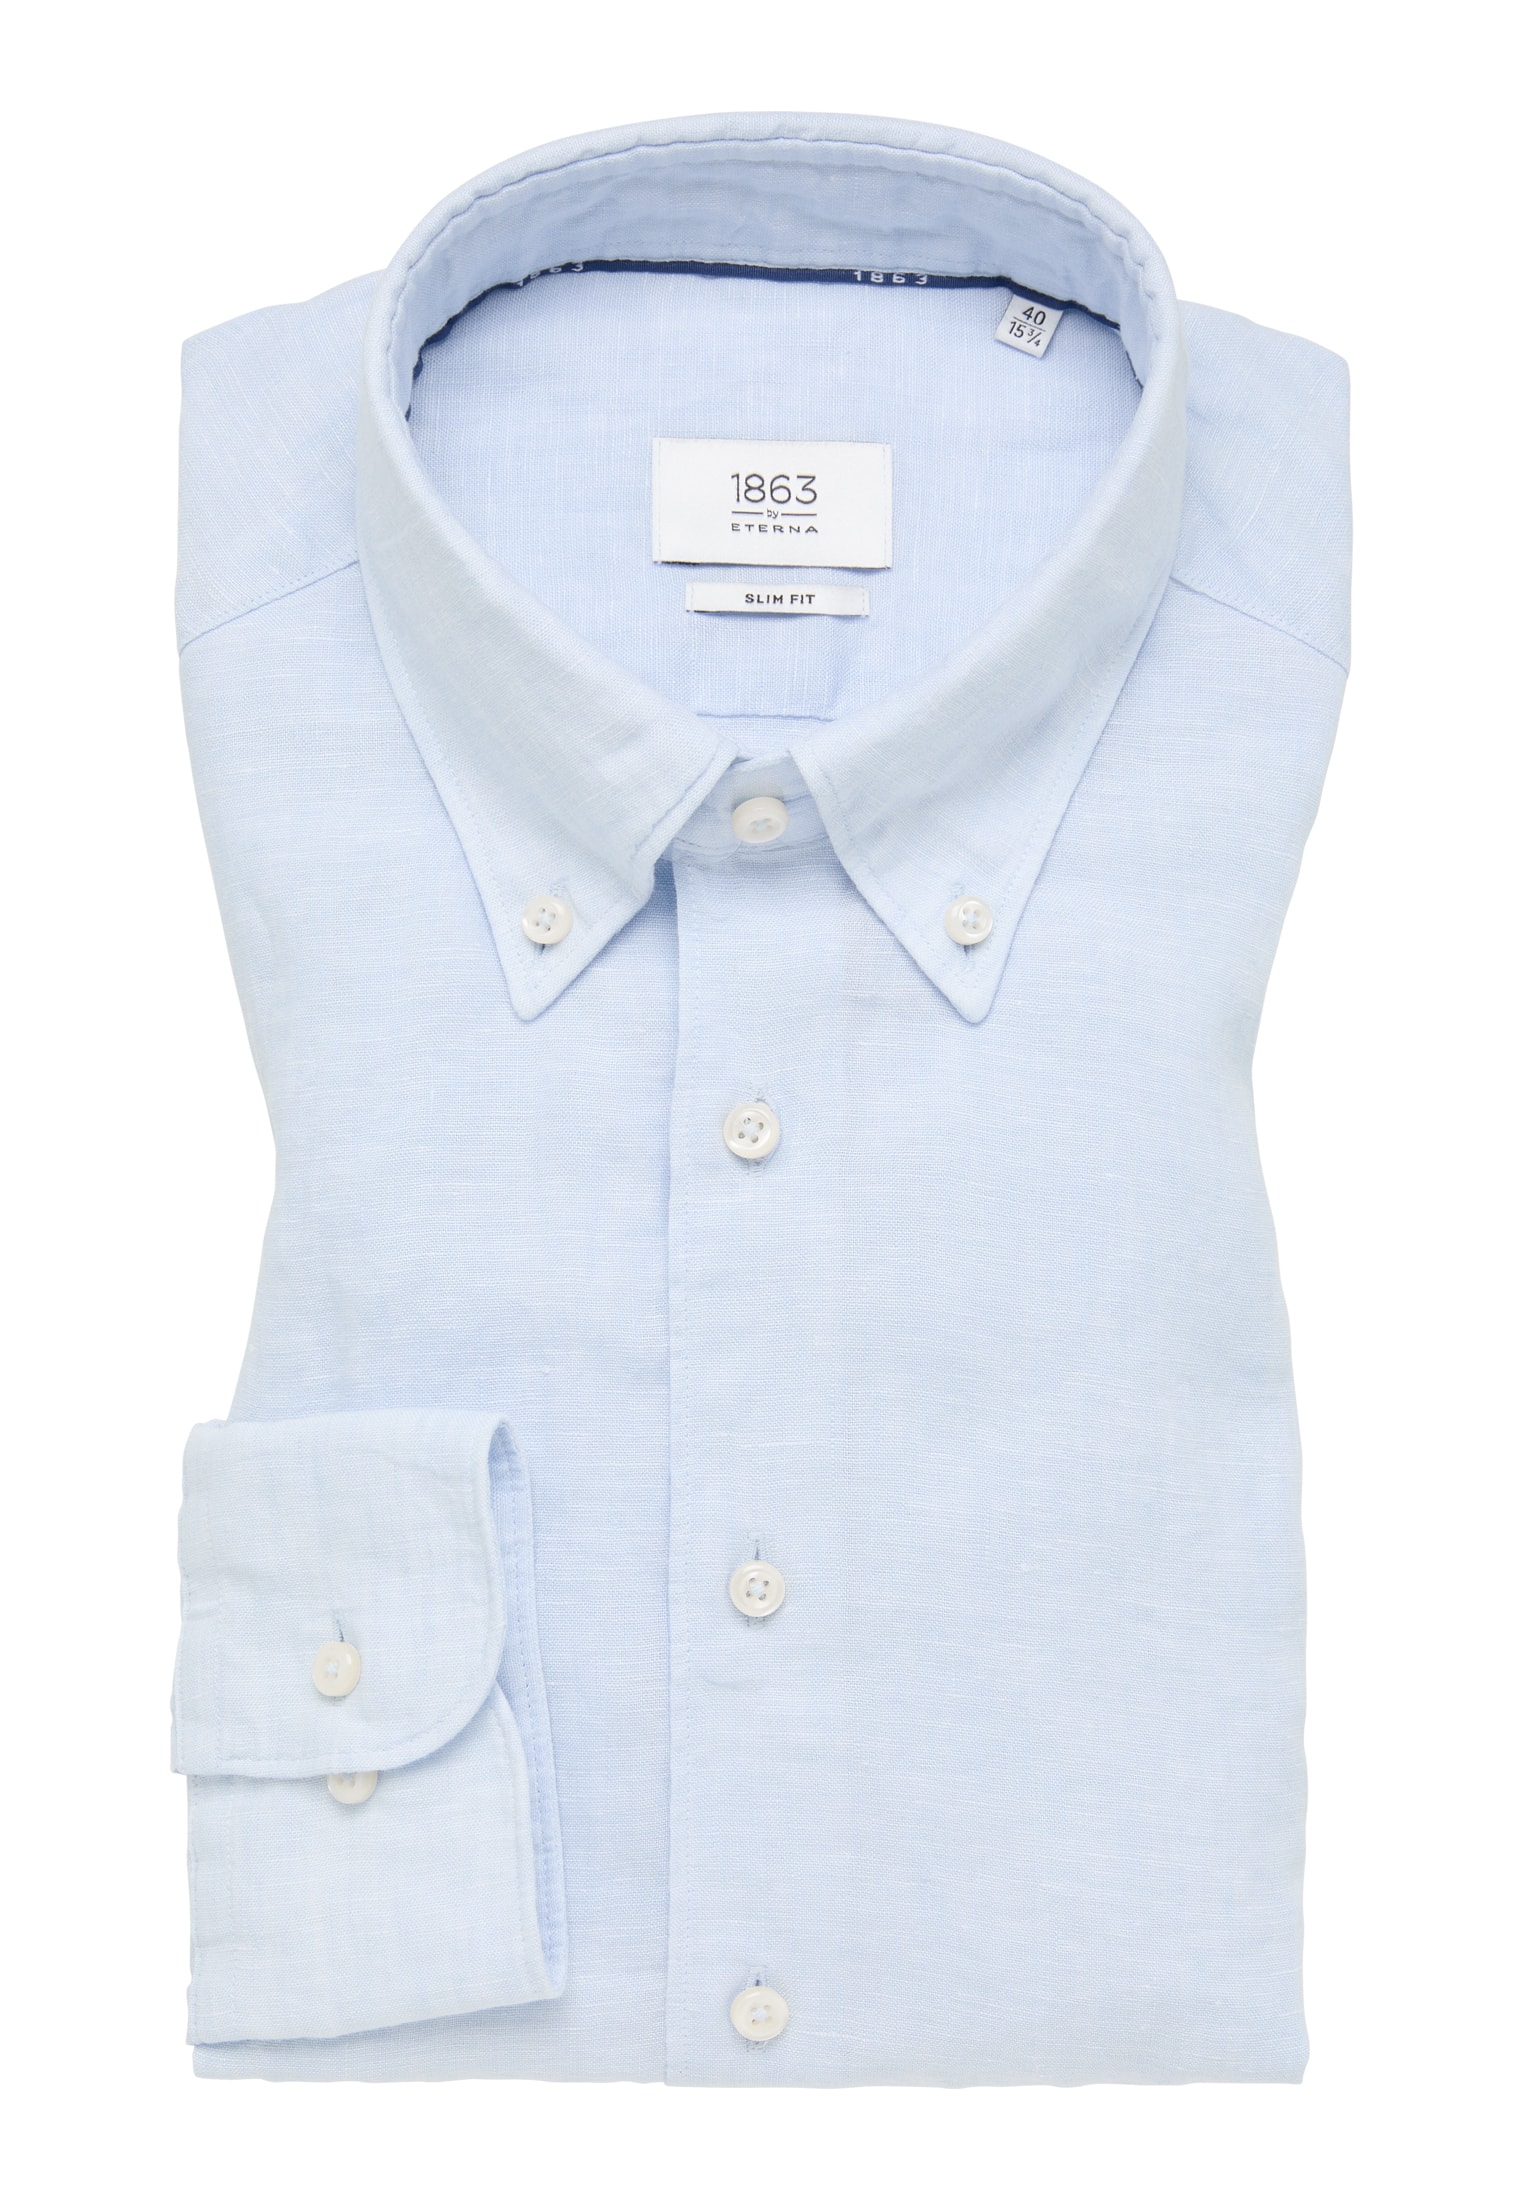 SLIM FIT Shirt in light blue plain | light blue | long sleeve | 40 |  1SH11907-01-11-40-1/1